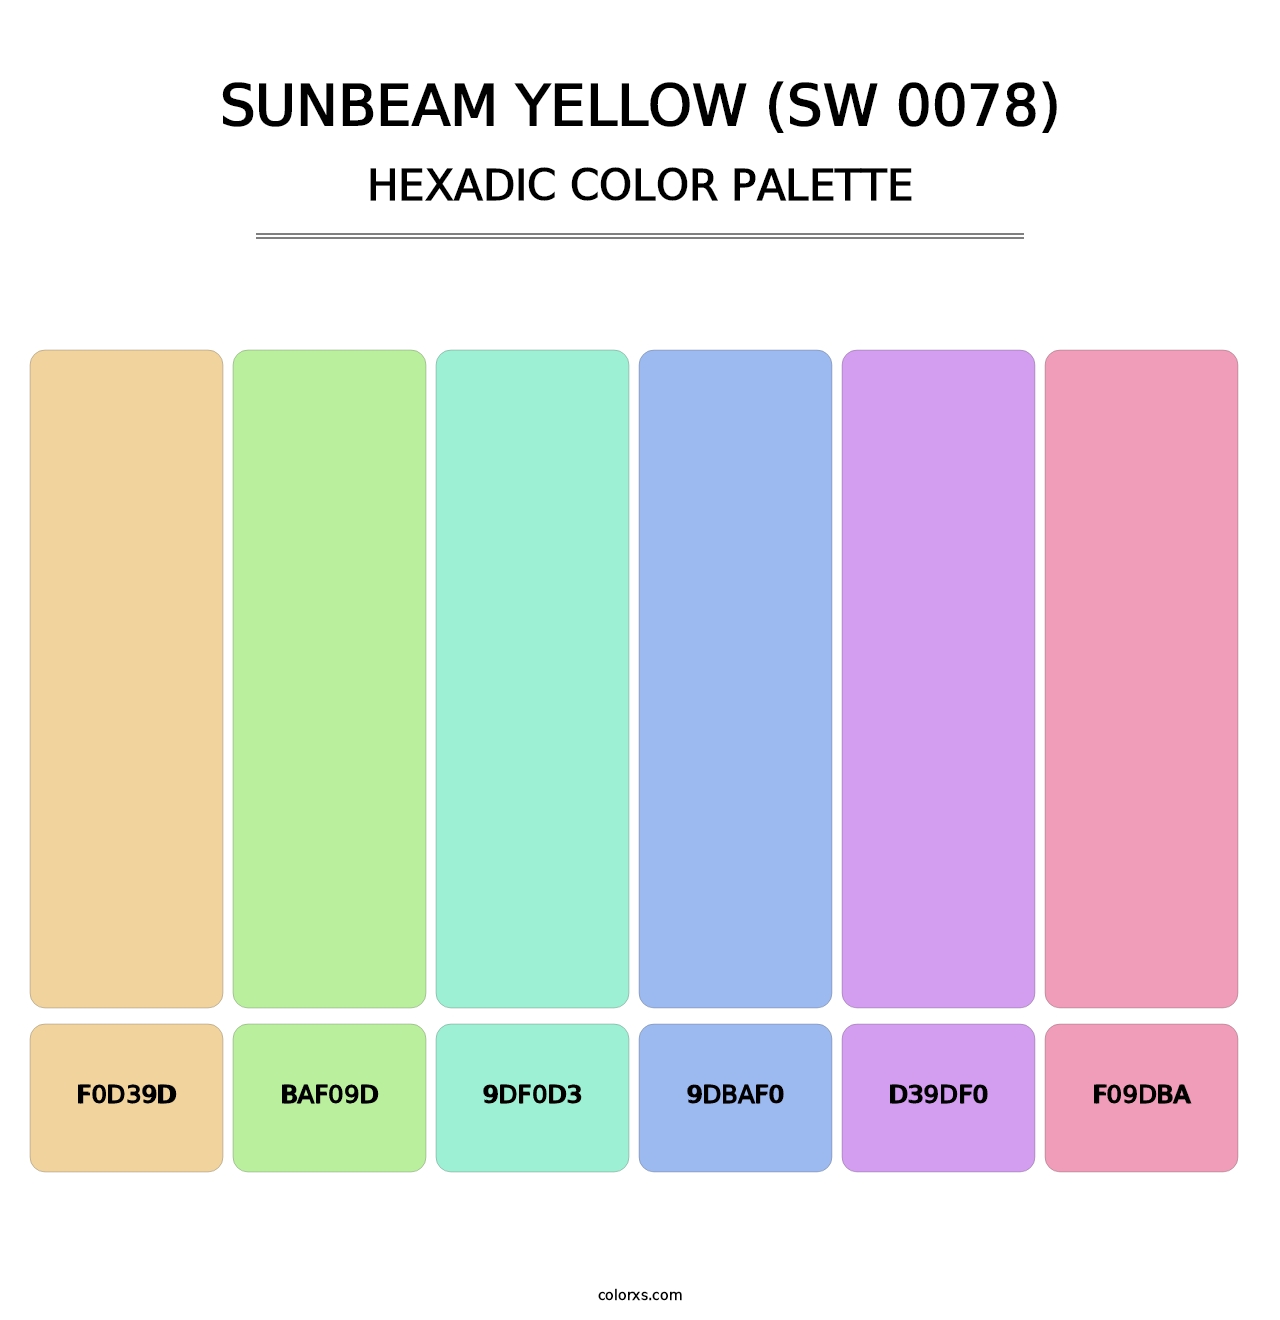 Sunbeam Yellow (SW 0078) - Hexadic Color Palette